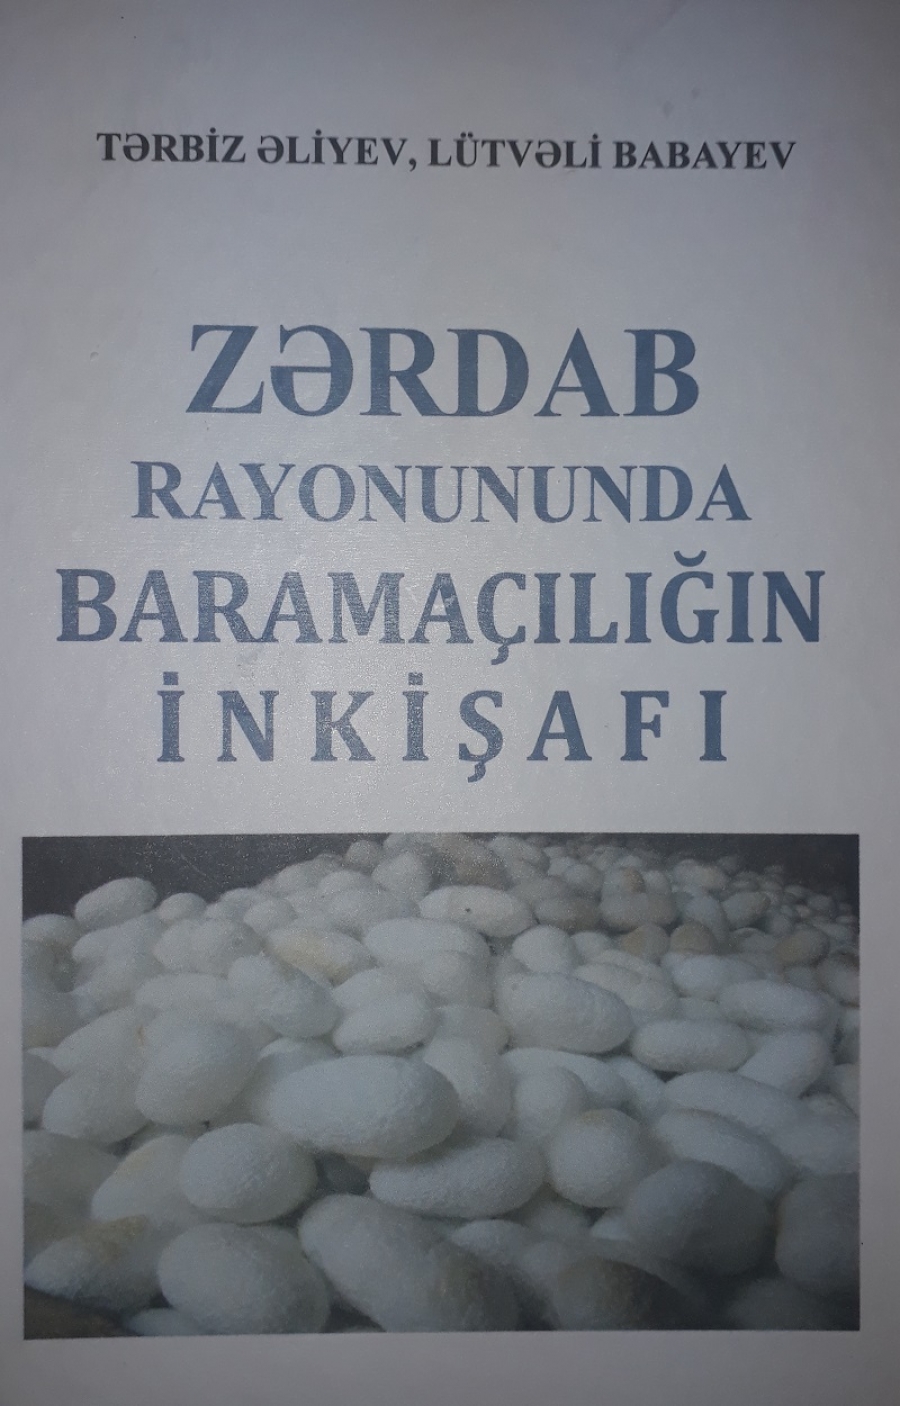 Released the book "Development of Silkworm breeding in Zardab region”